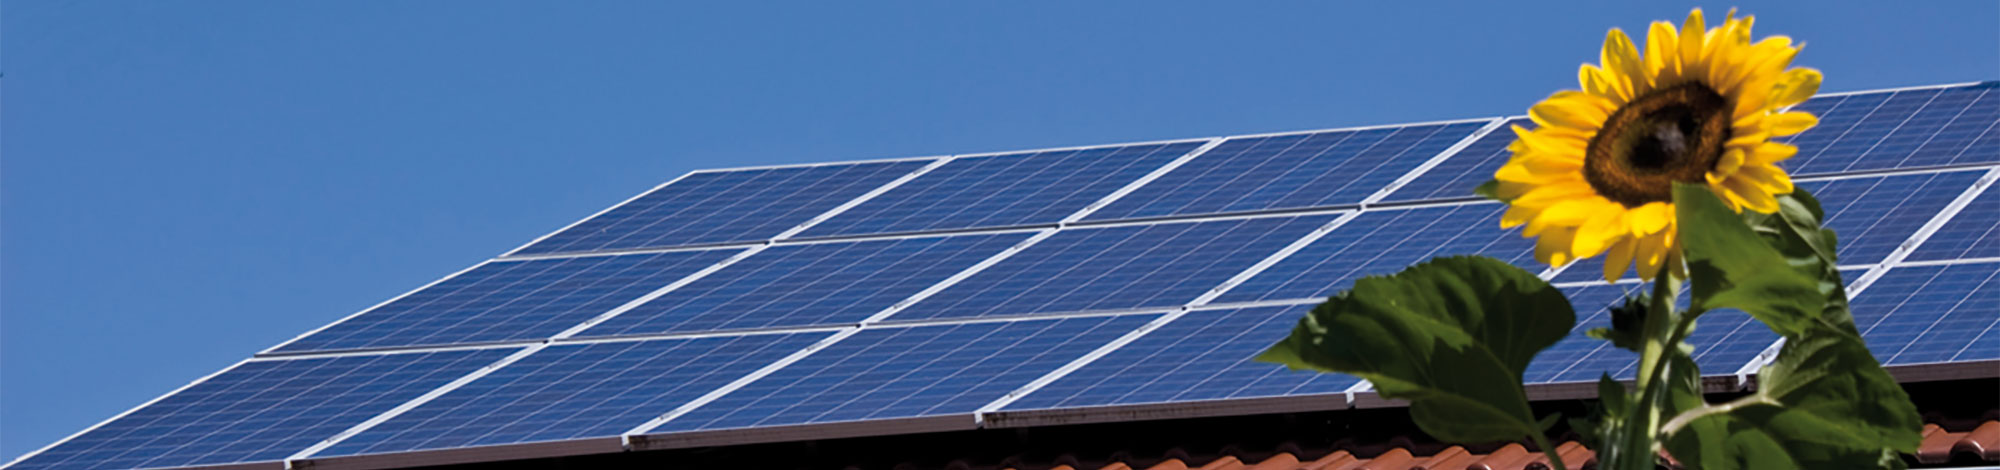 Photovoltaik-Solar